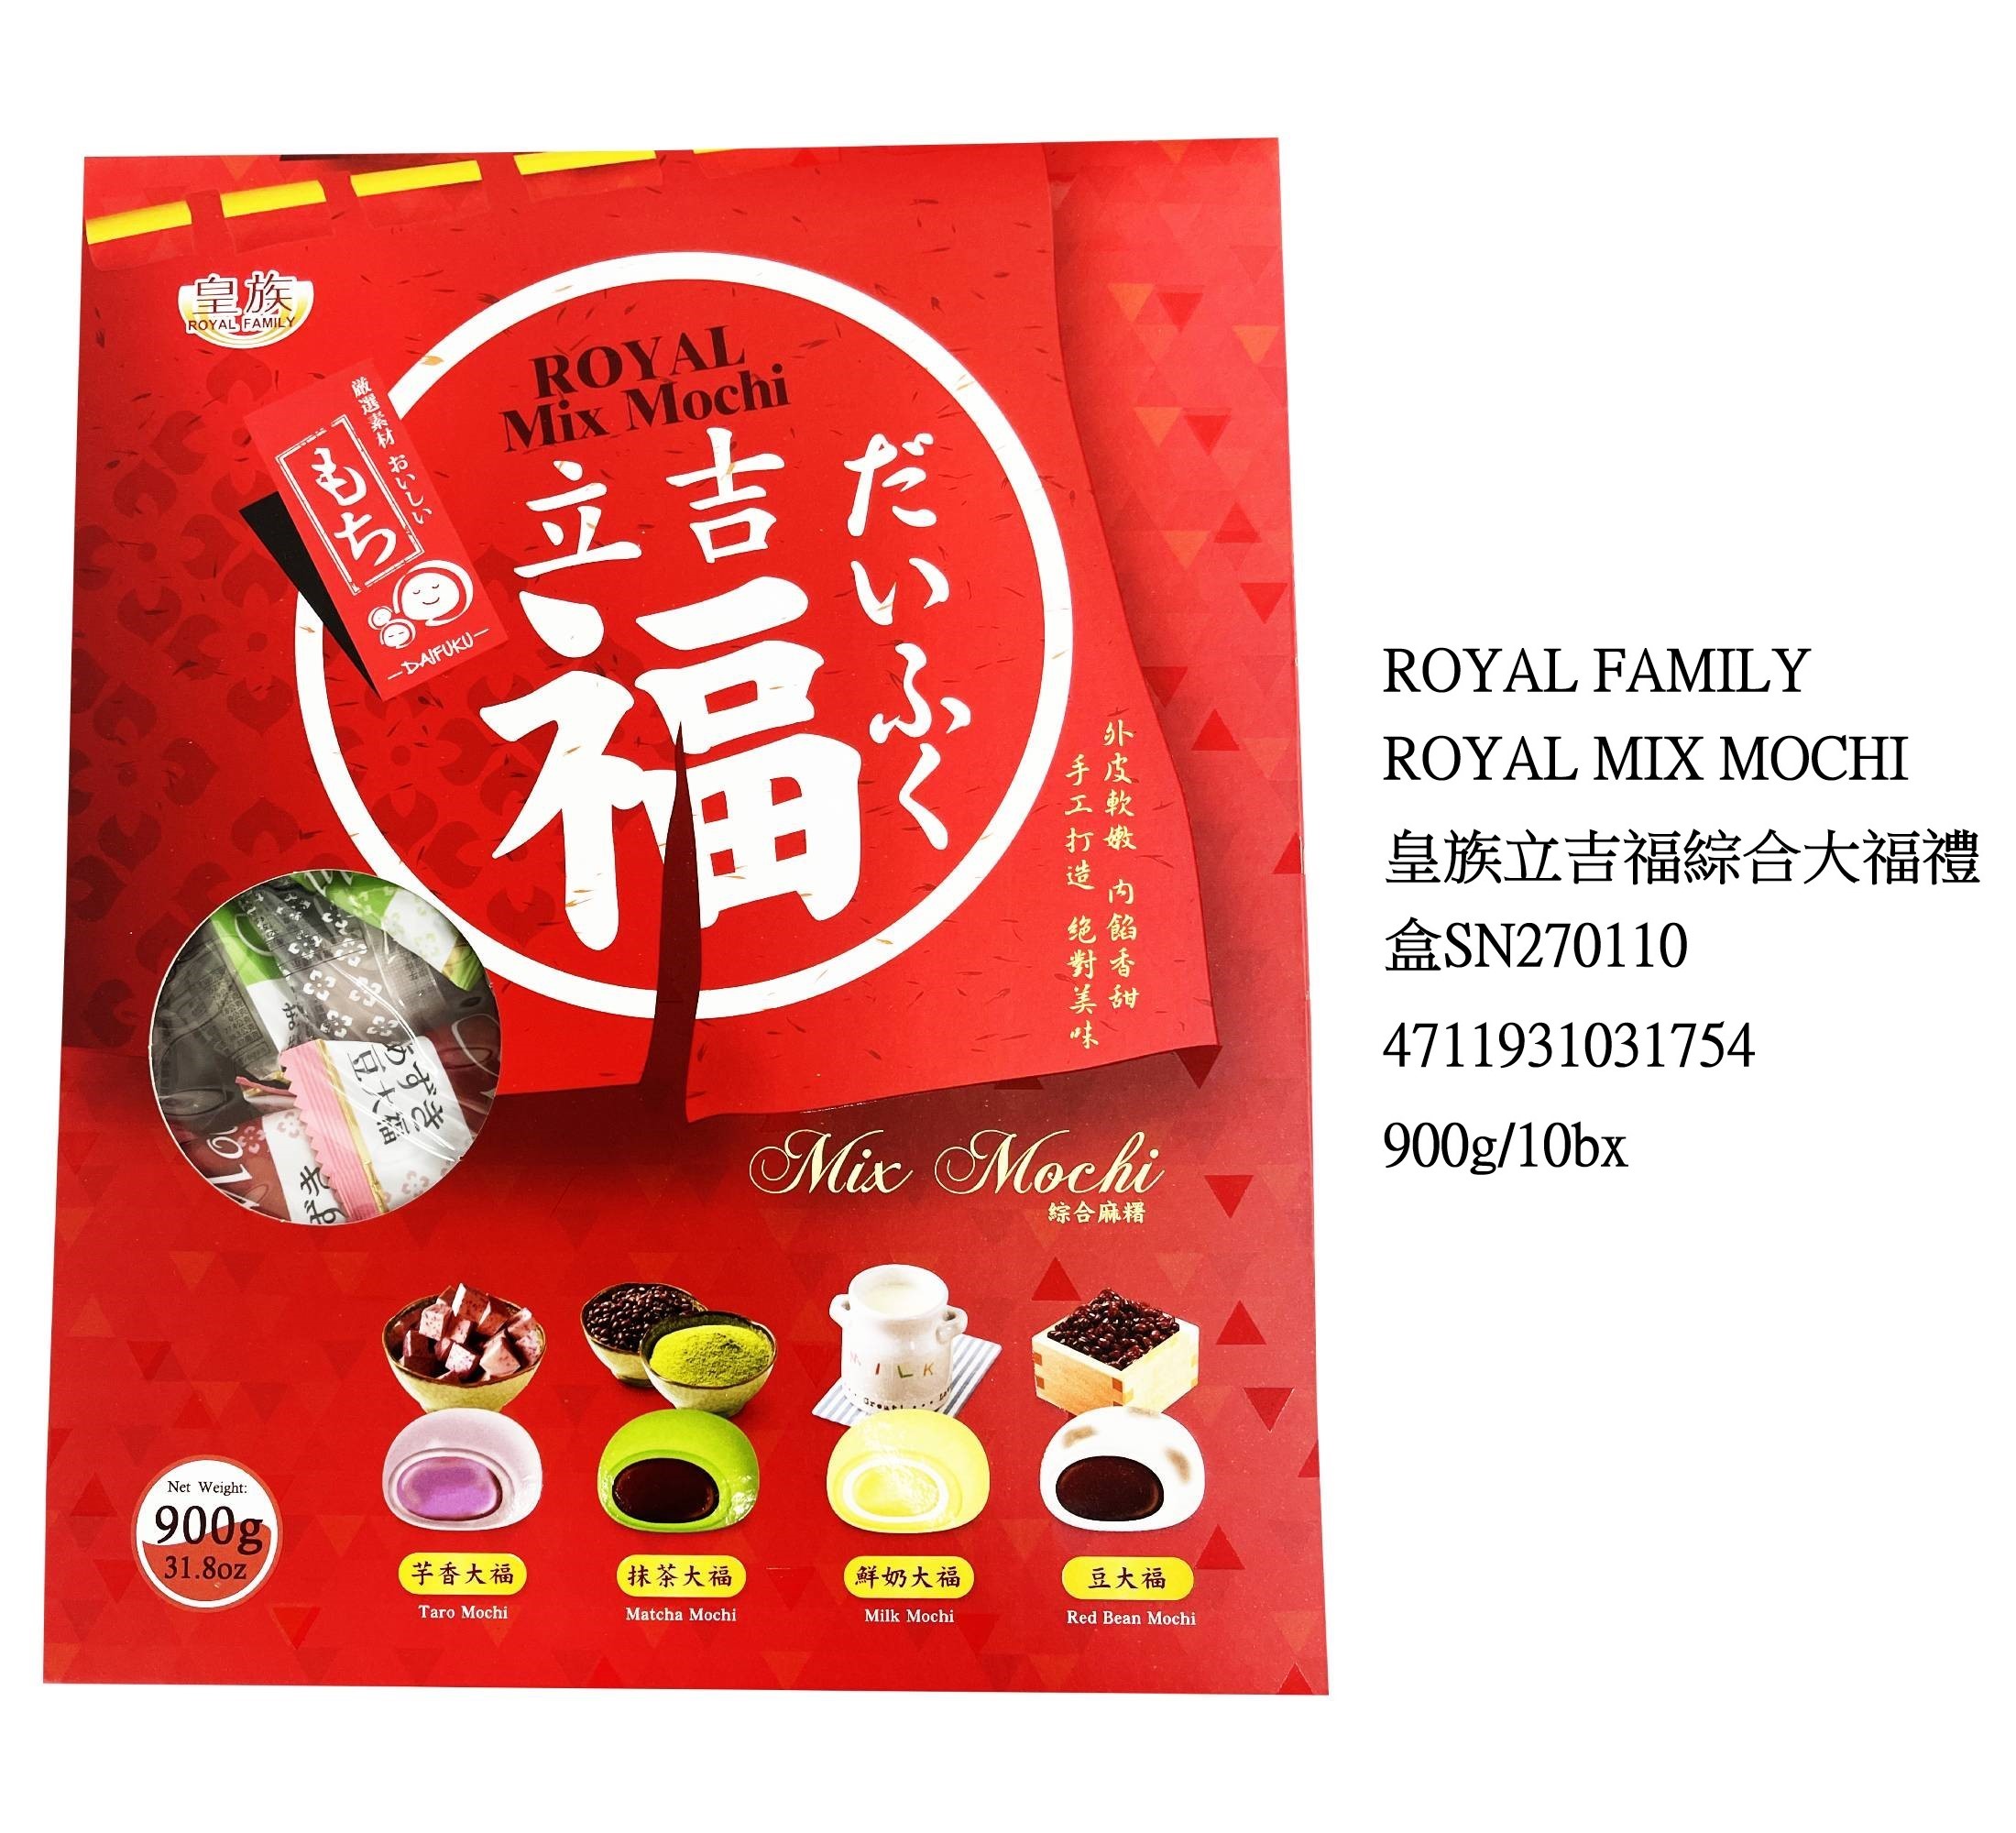 ROYAL FAMILY MIX MOCHI GIFT BOX SN270110